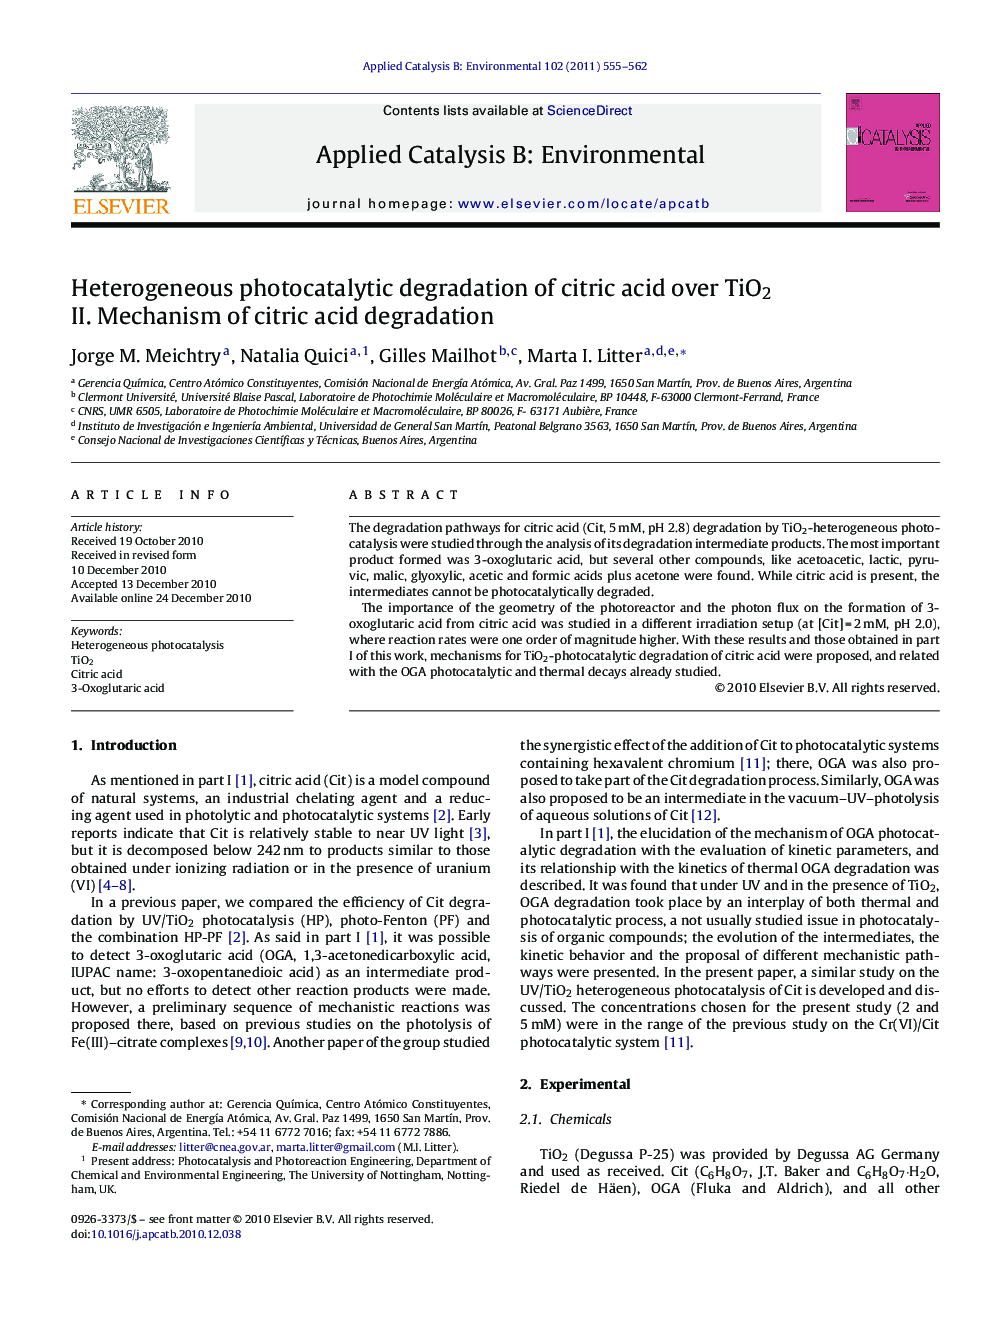 Heterogeneous photocatalytic degradation of citric acid over TiO2: II. Mechanism of citric acid degradation